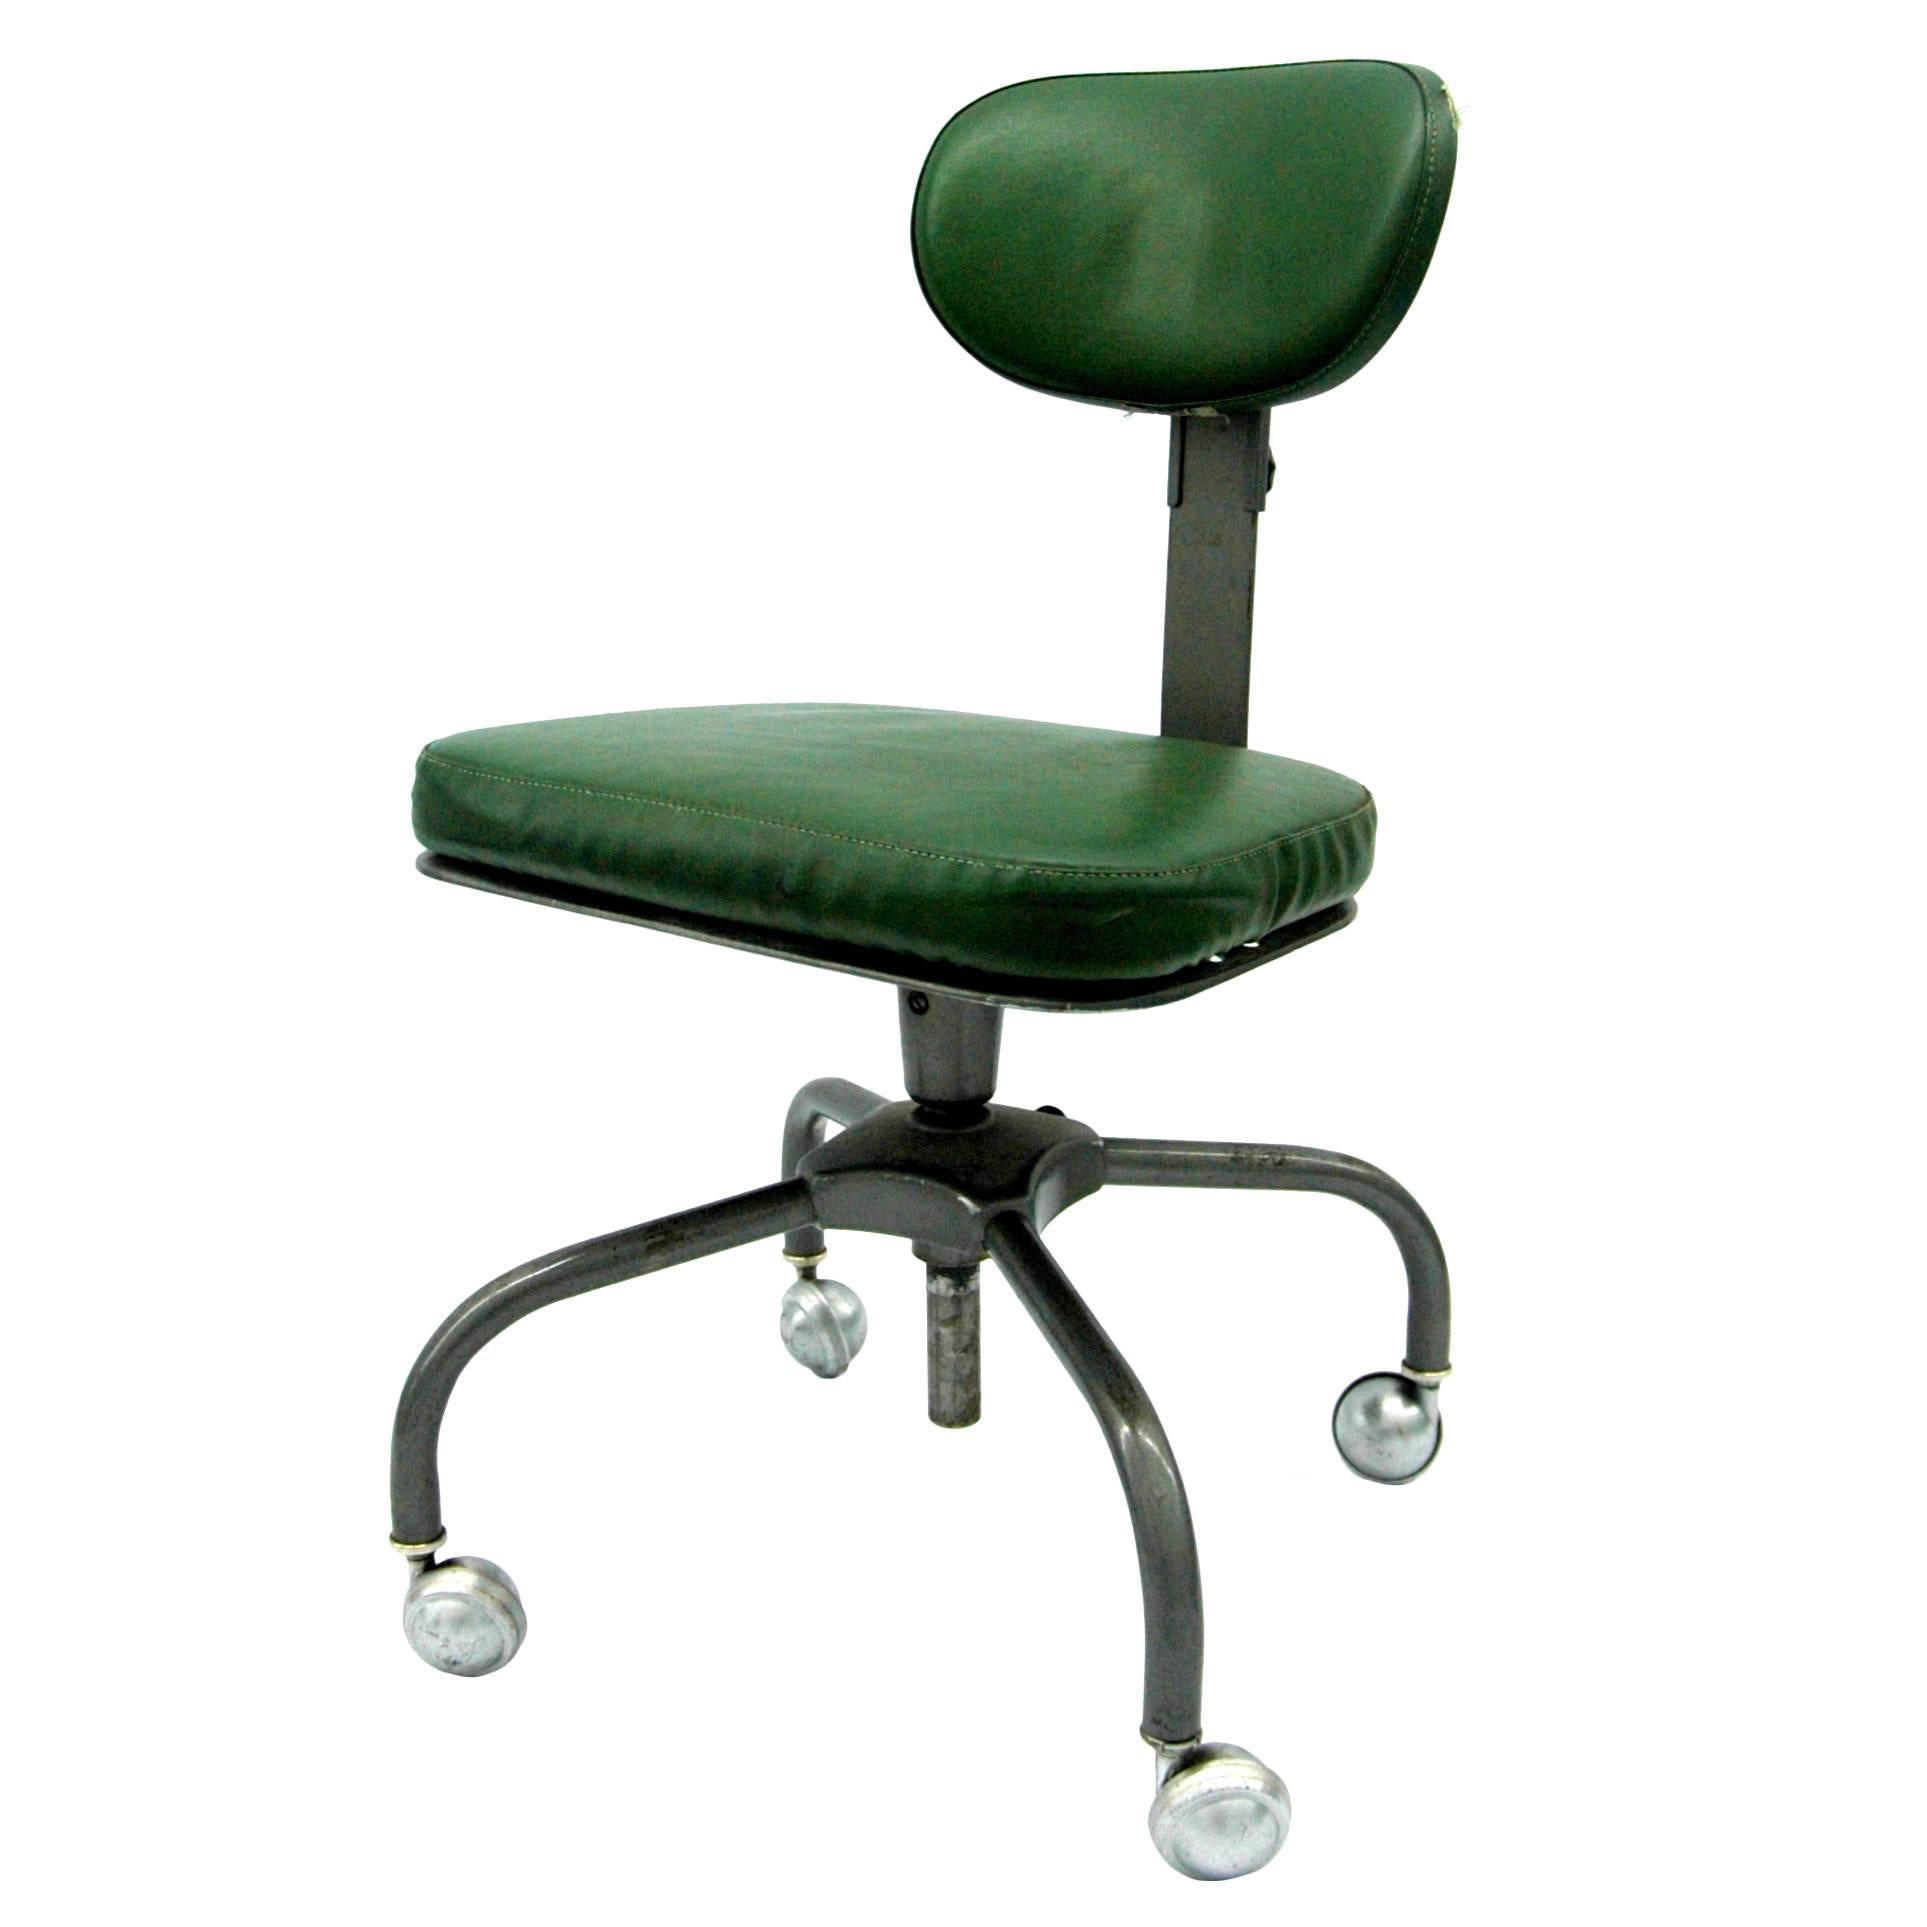 Air-Flow Desk Chair by Cramer